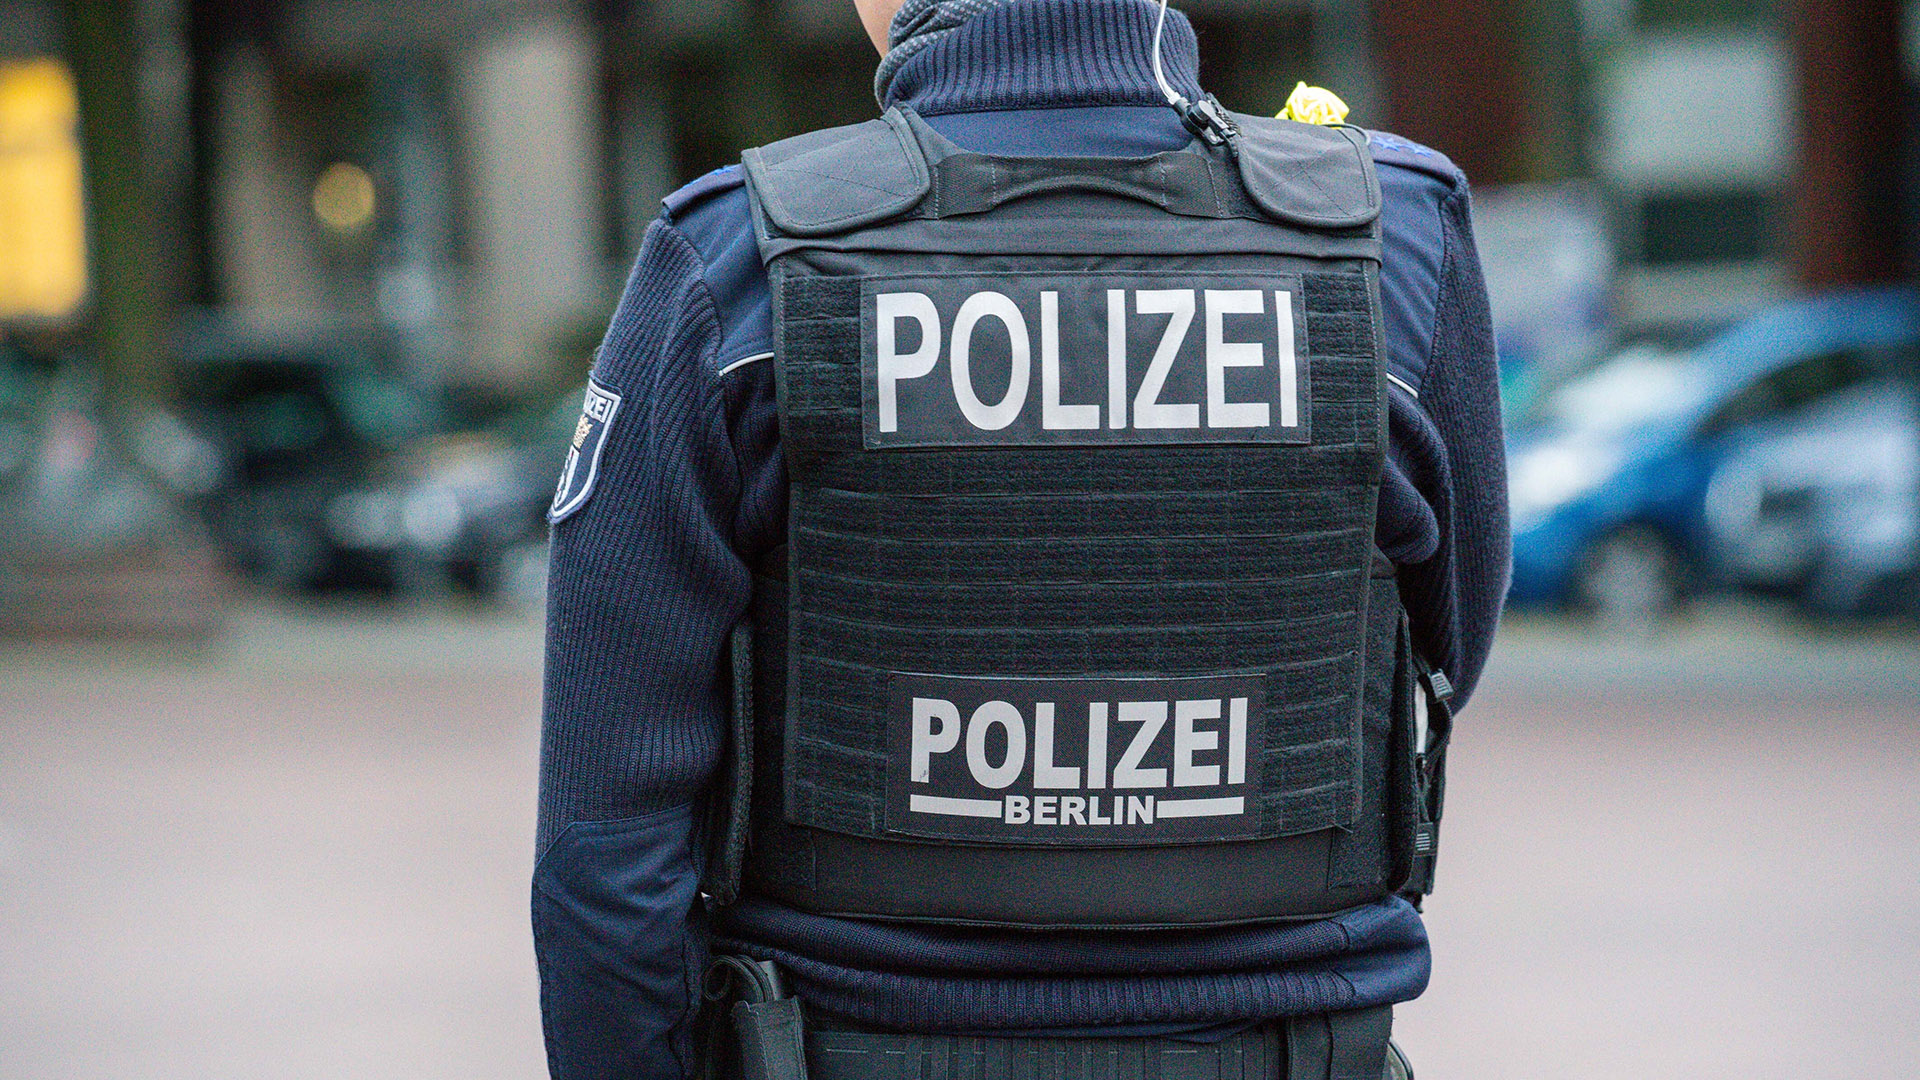 Symbolbild: Polizeibeamter aus Berlin (Quelle: dpa/Fotostand/Reuhl)